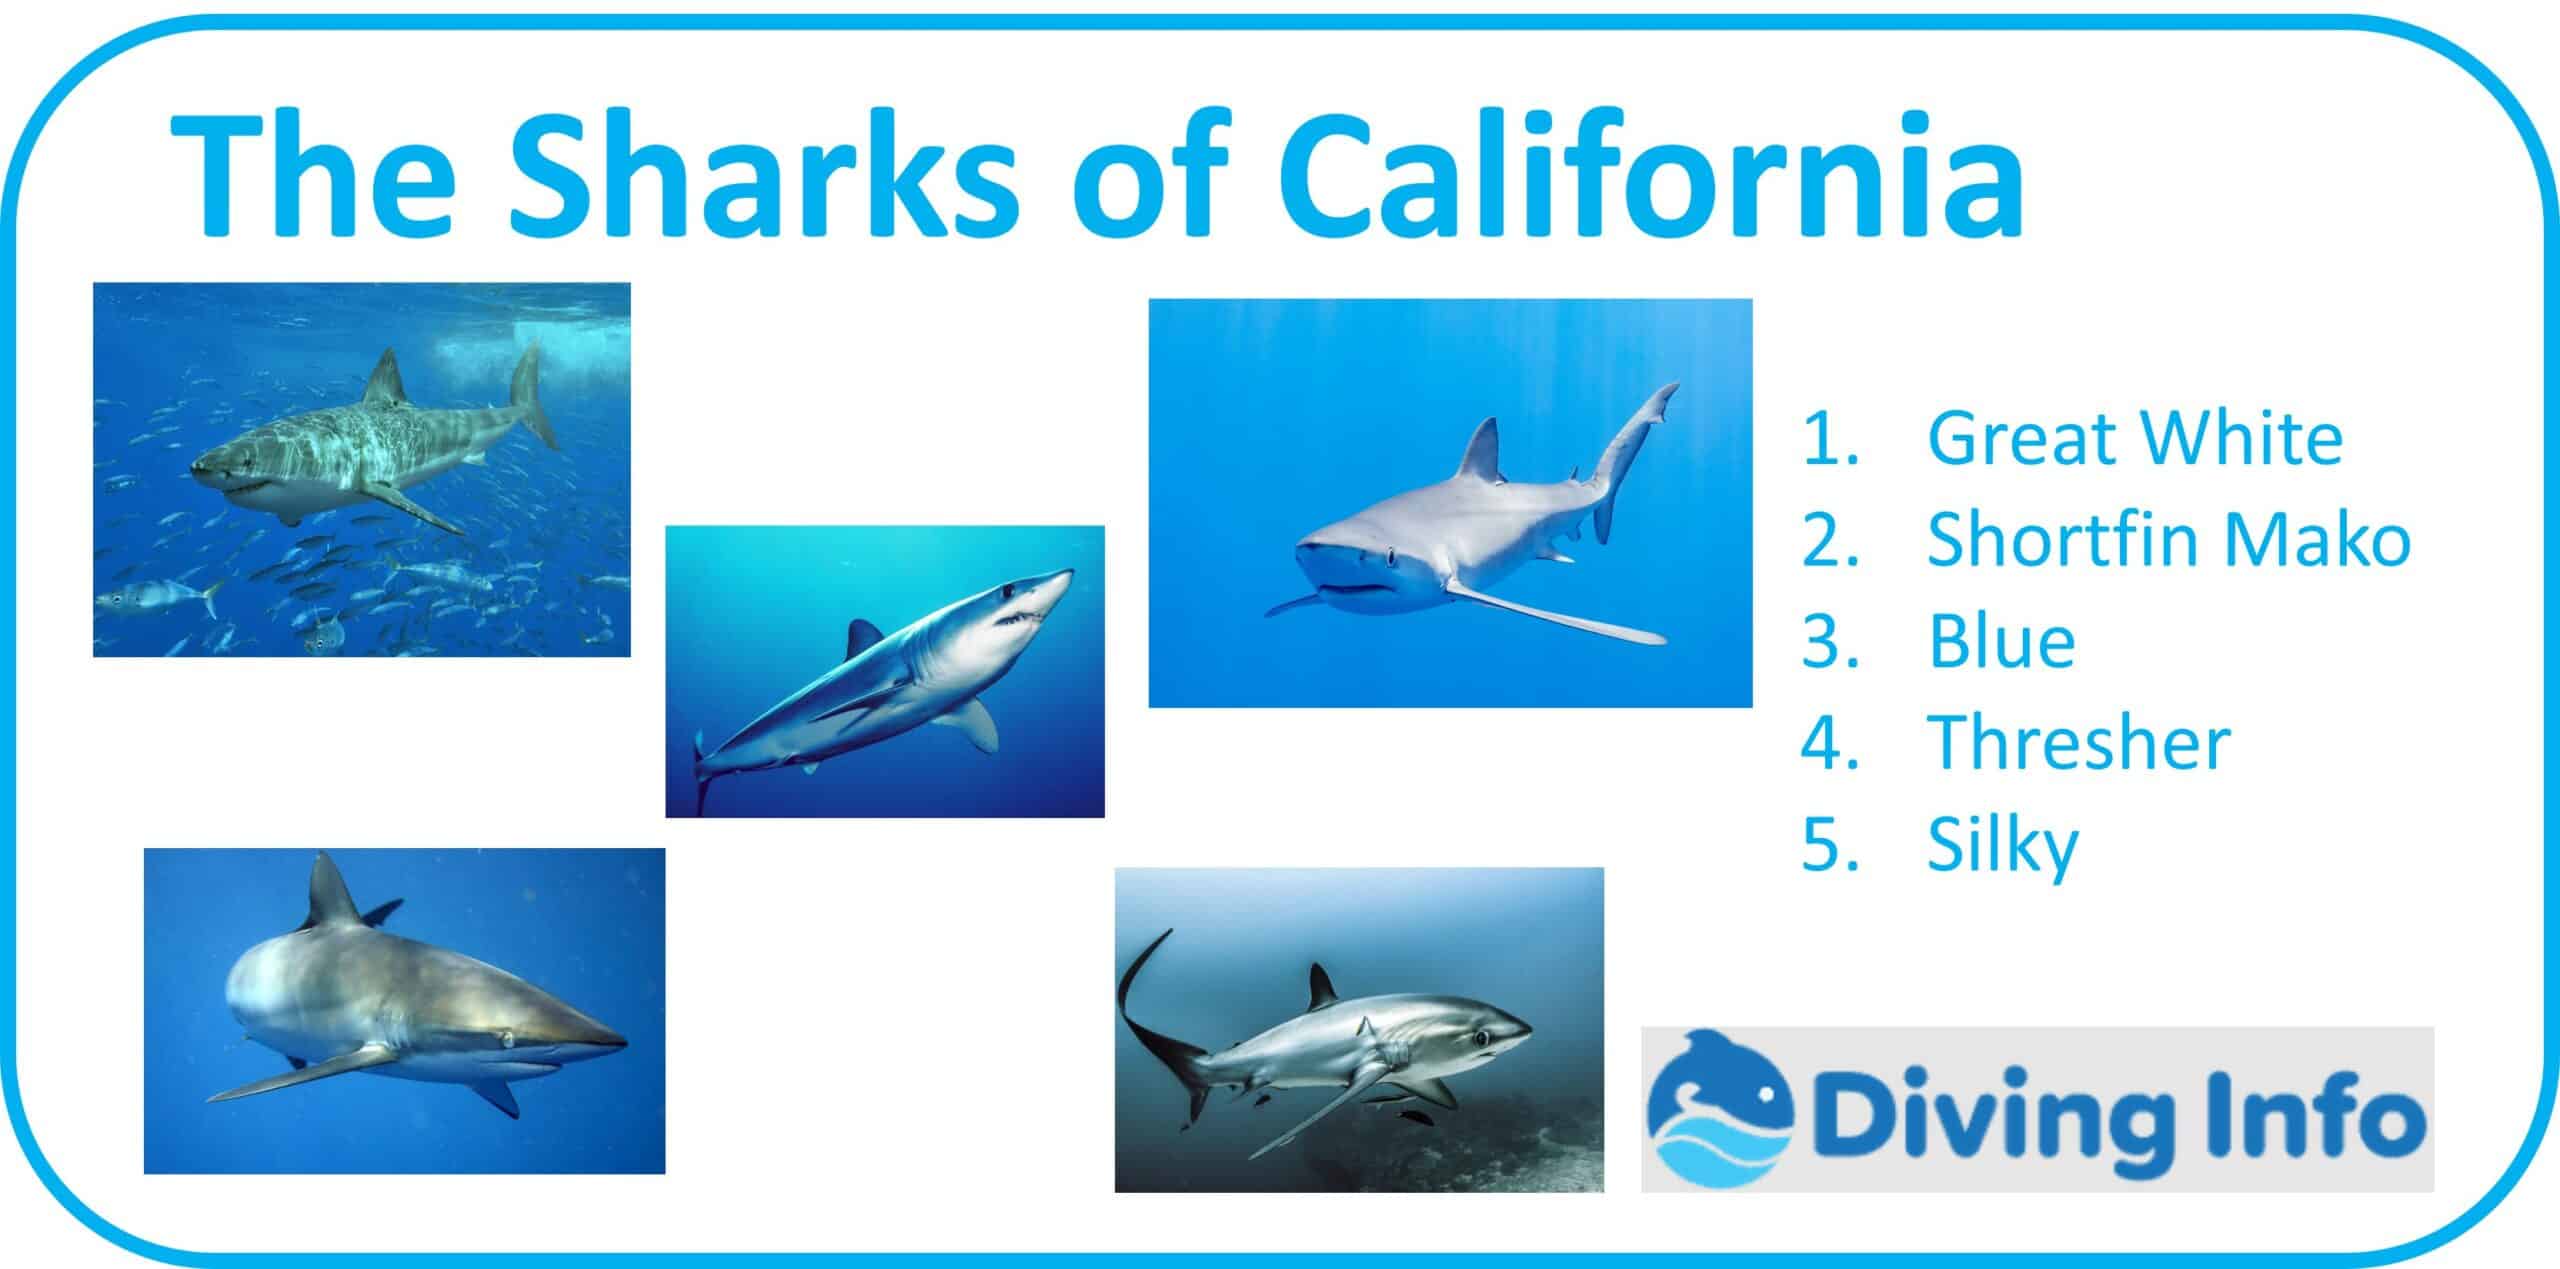 The Sharks of California